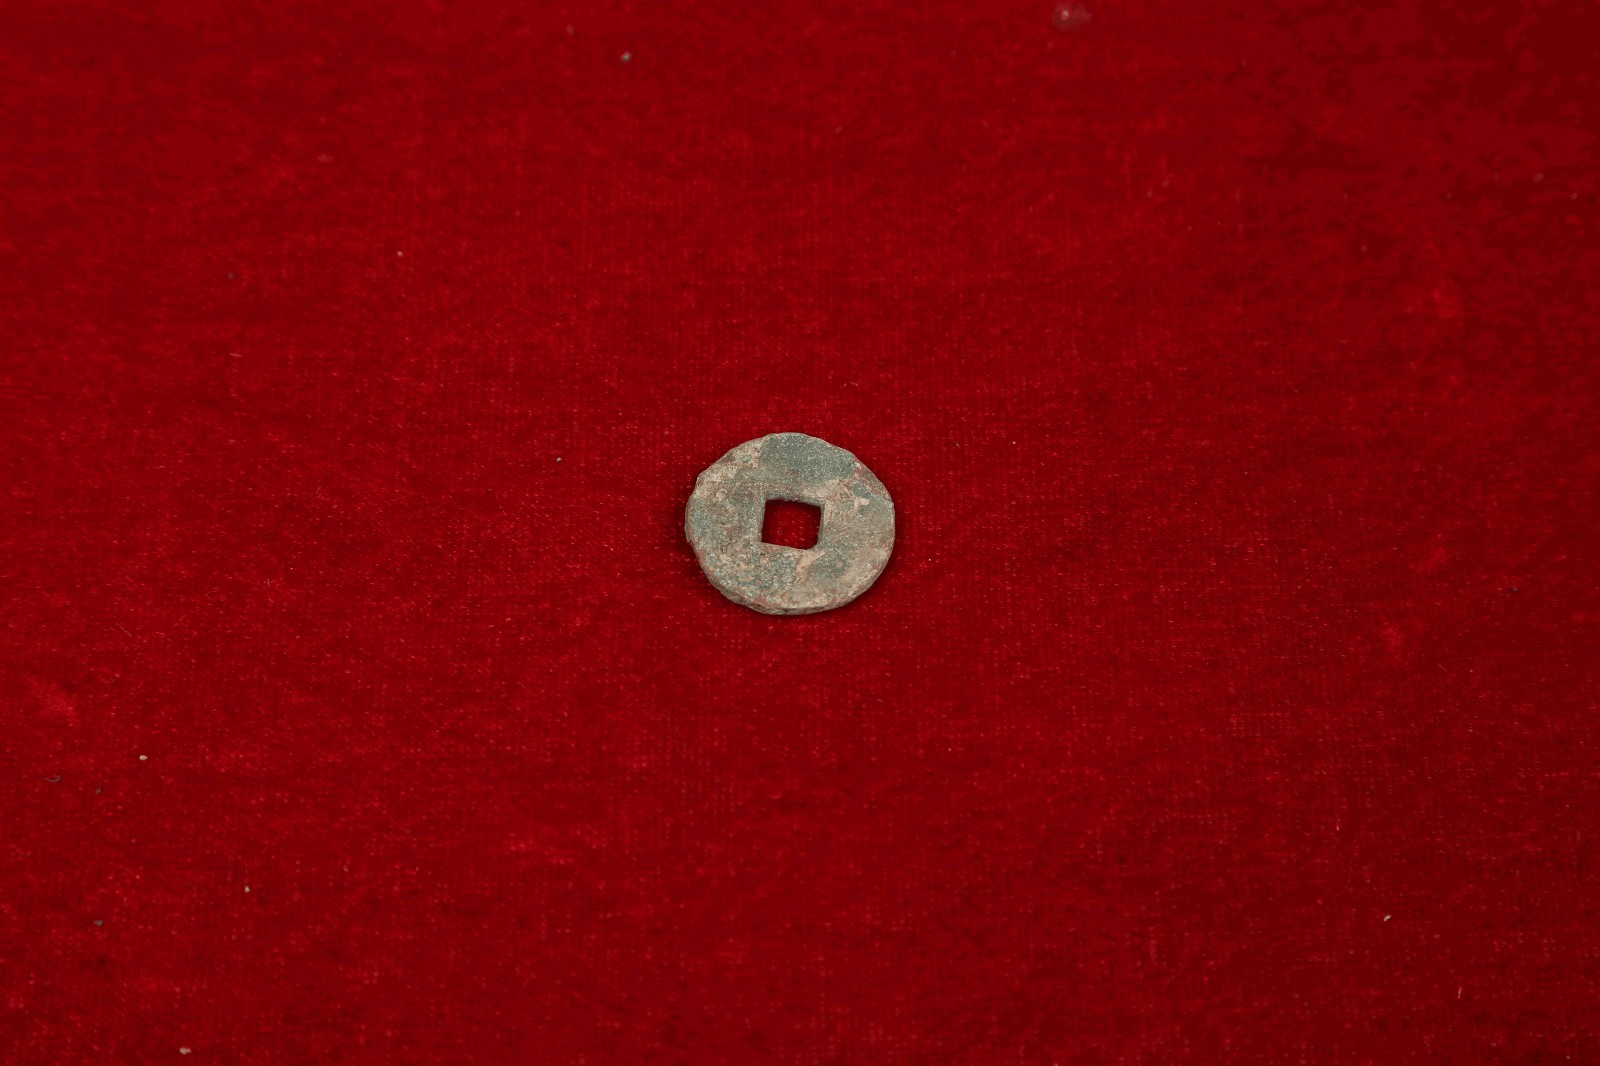 SDCS201709752—货泉铜钱，直径2.36米，厚度0.3厘米，重4.23克。.JPG